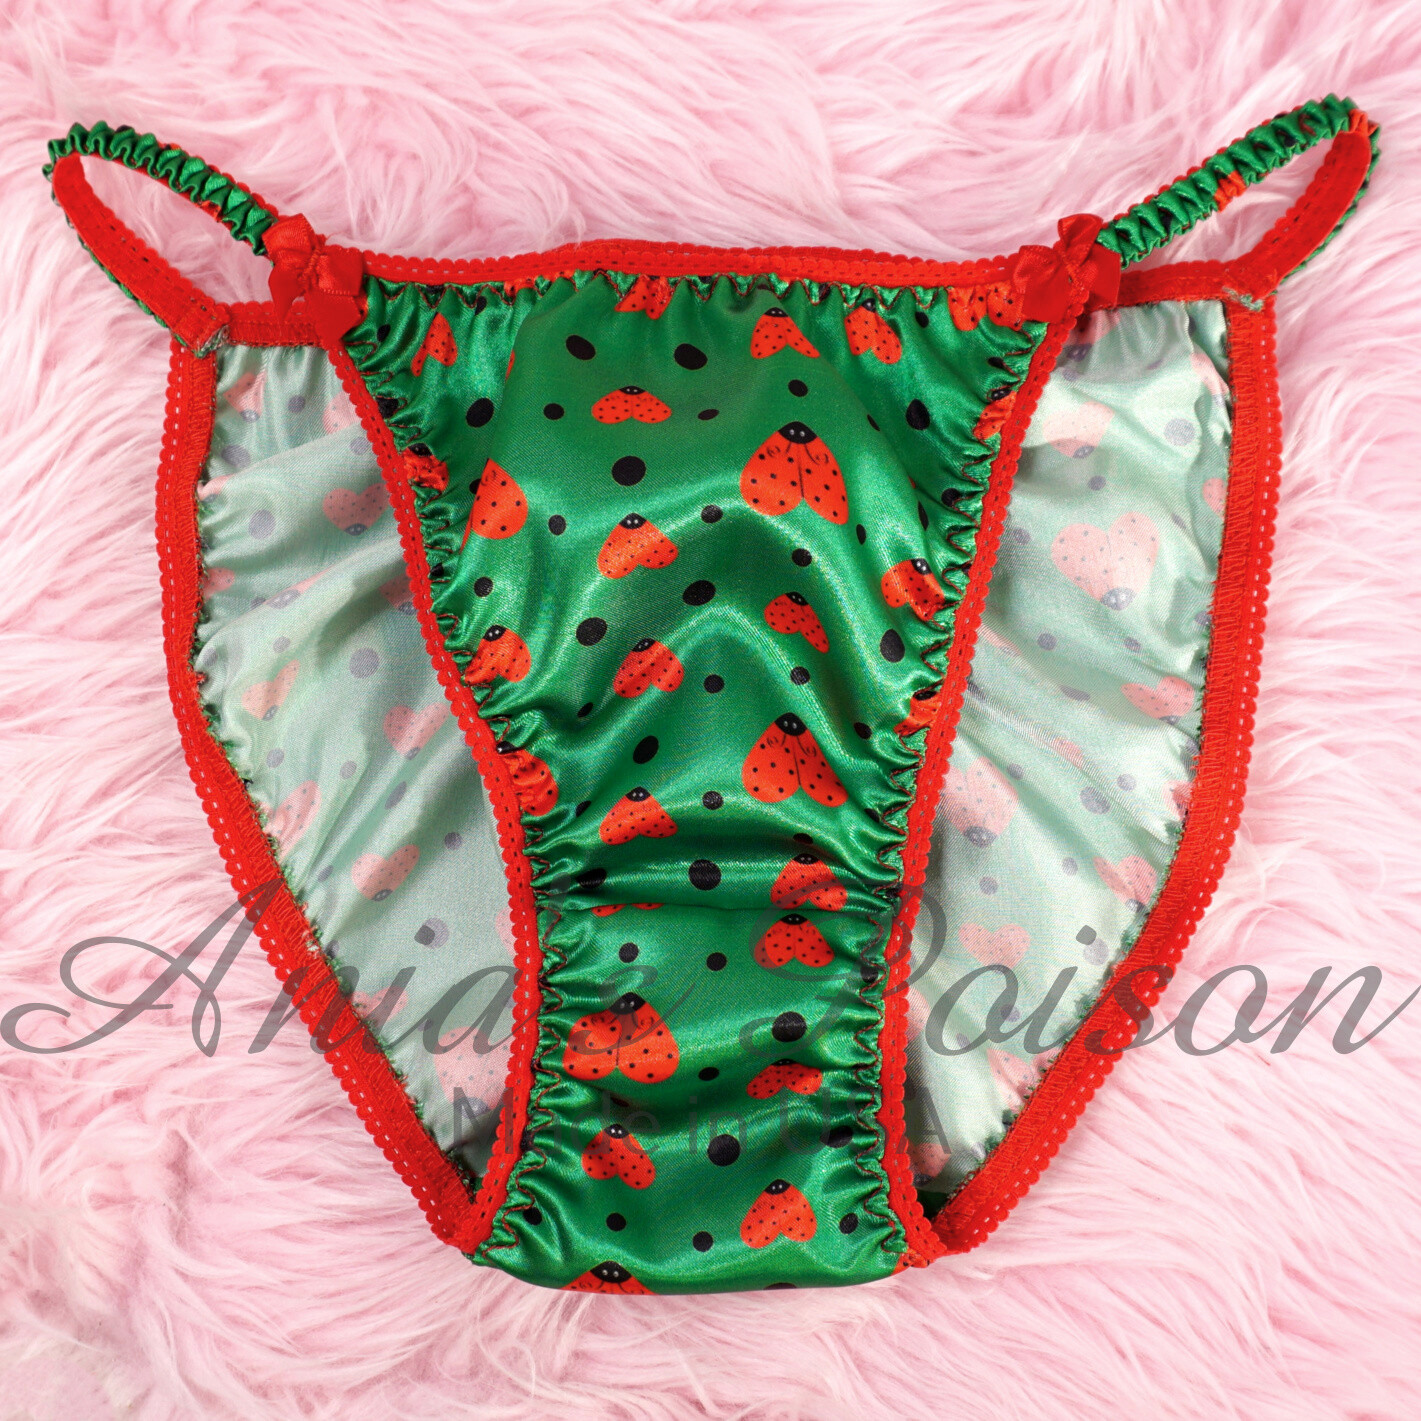 Satin panties LADIES CUT - Lace Duchess Classic 80's cut Green Lady Bug 90s style Spring Edition String Bikini panties 6-8